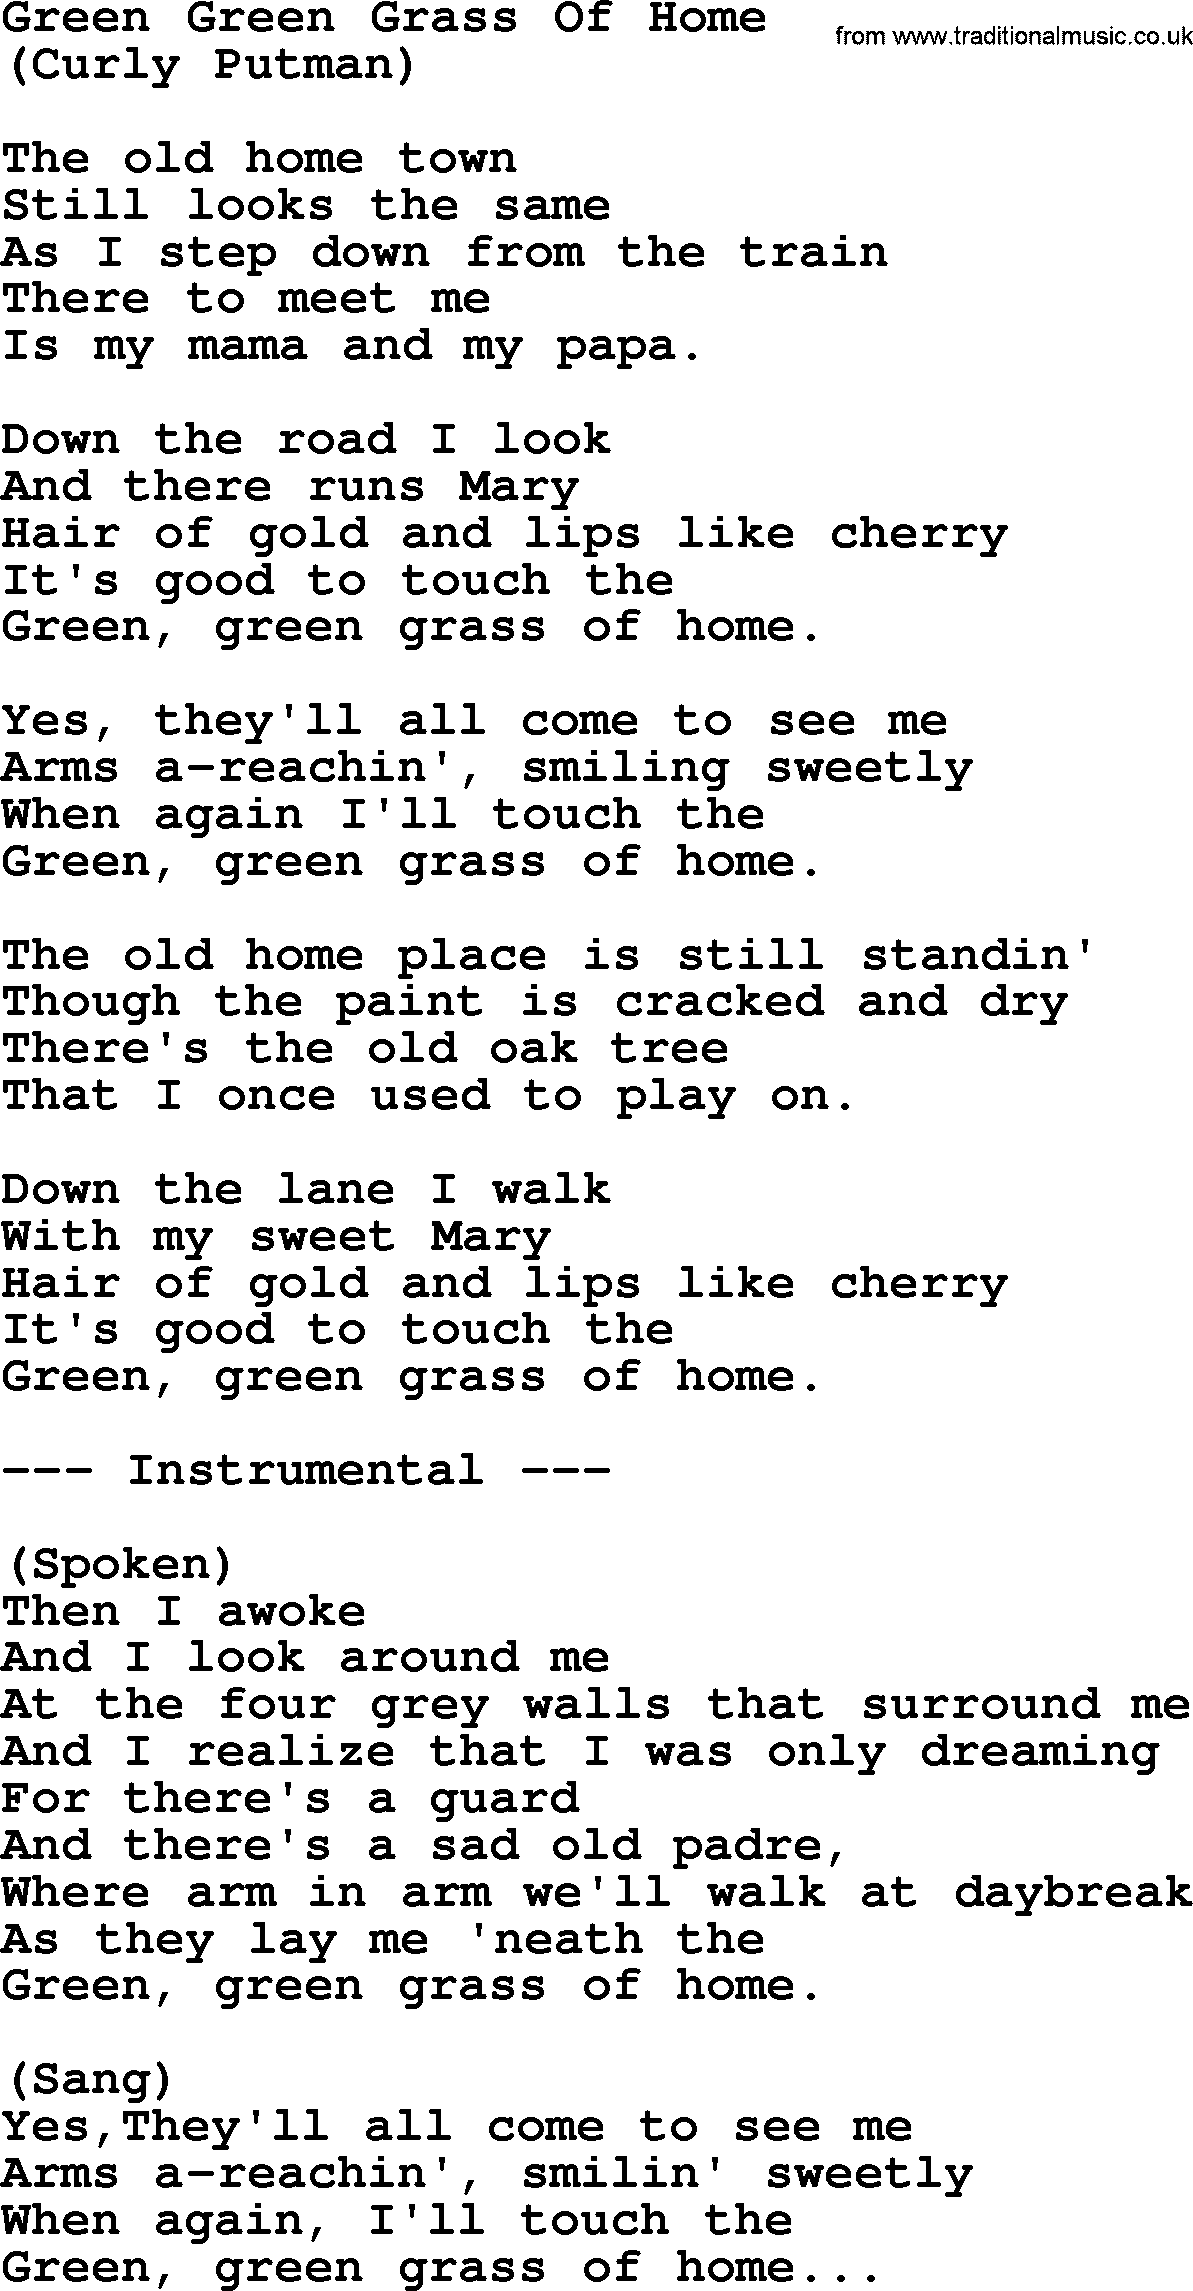 George Jones song: Green Green Grass Of Home, lyrics